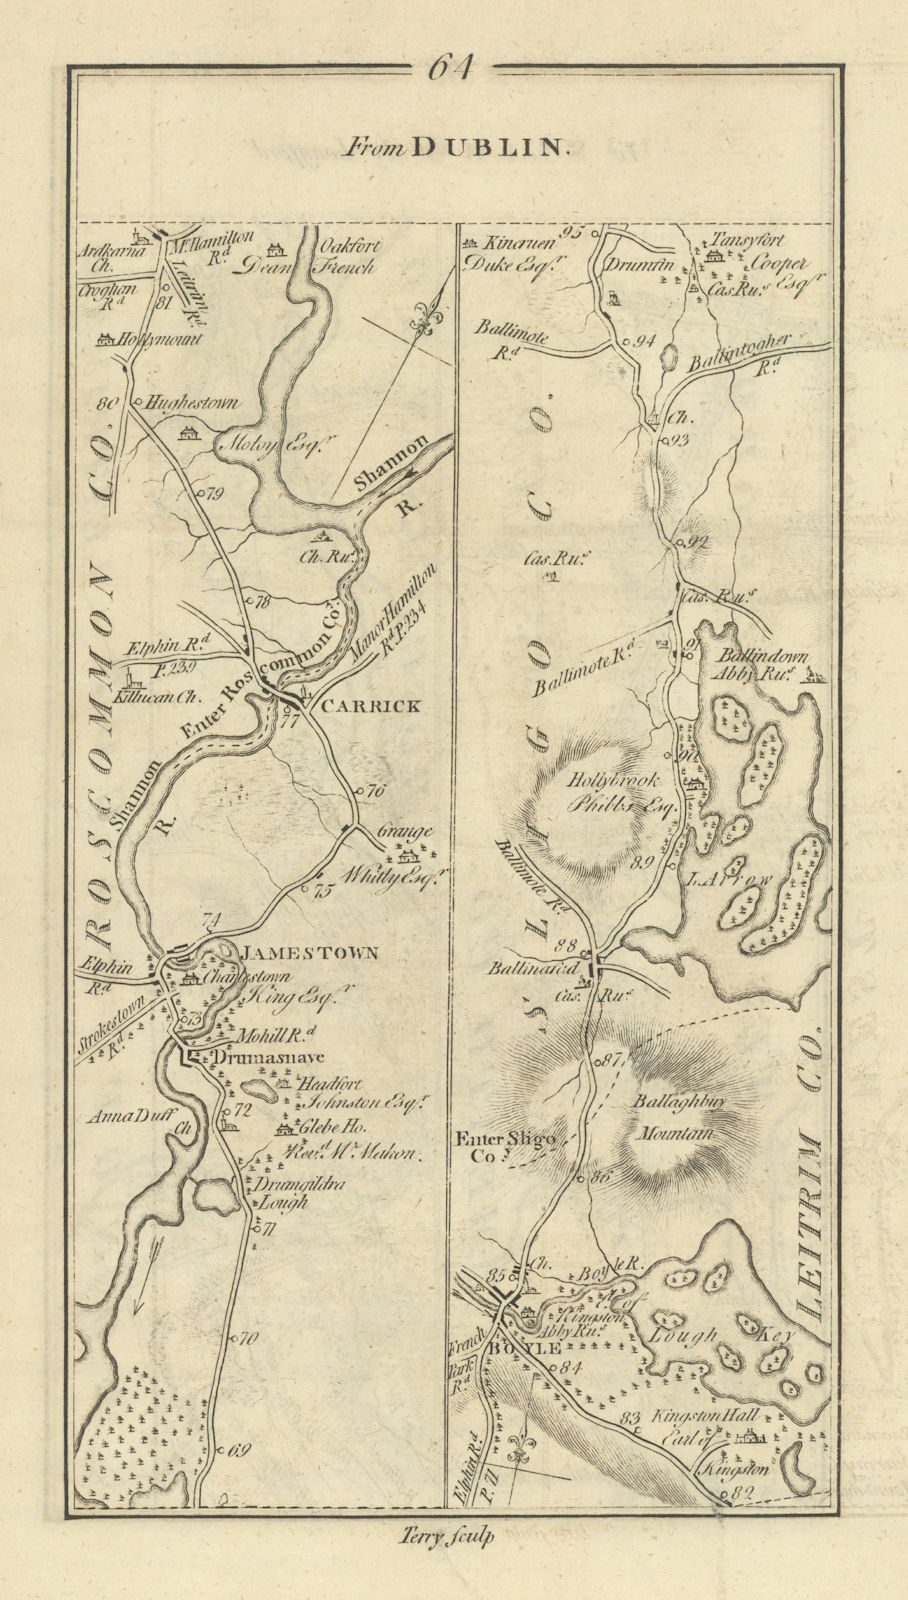 #64 Carrick/Shannon Drumsna Boyle Ballinafad Jamestown. TAYLOR/SKINNER 1778 map